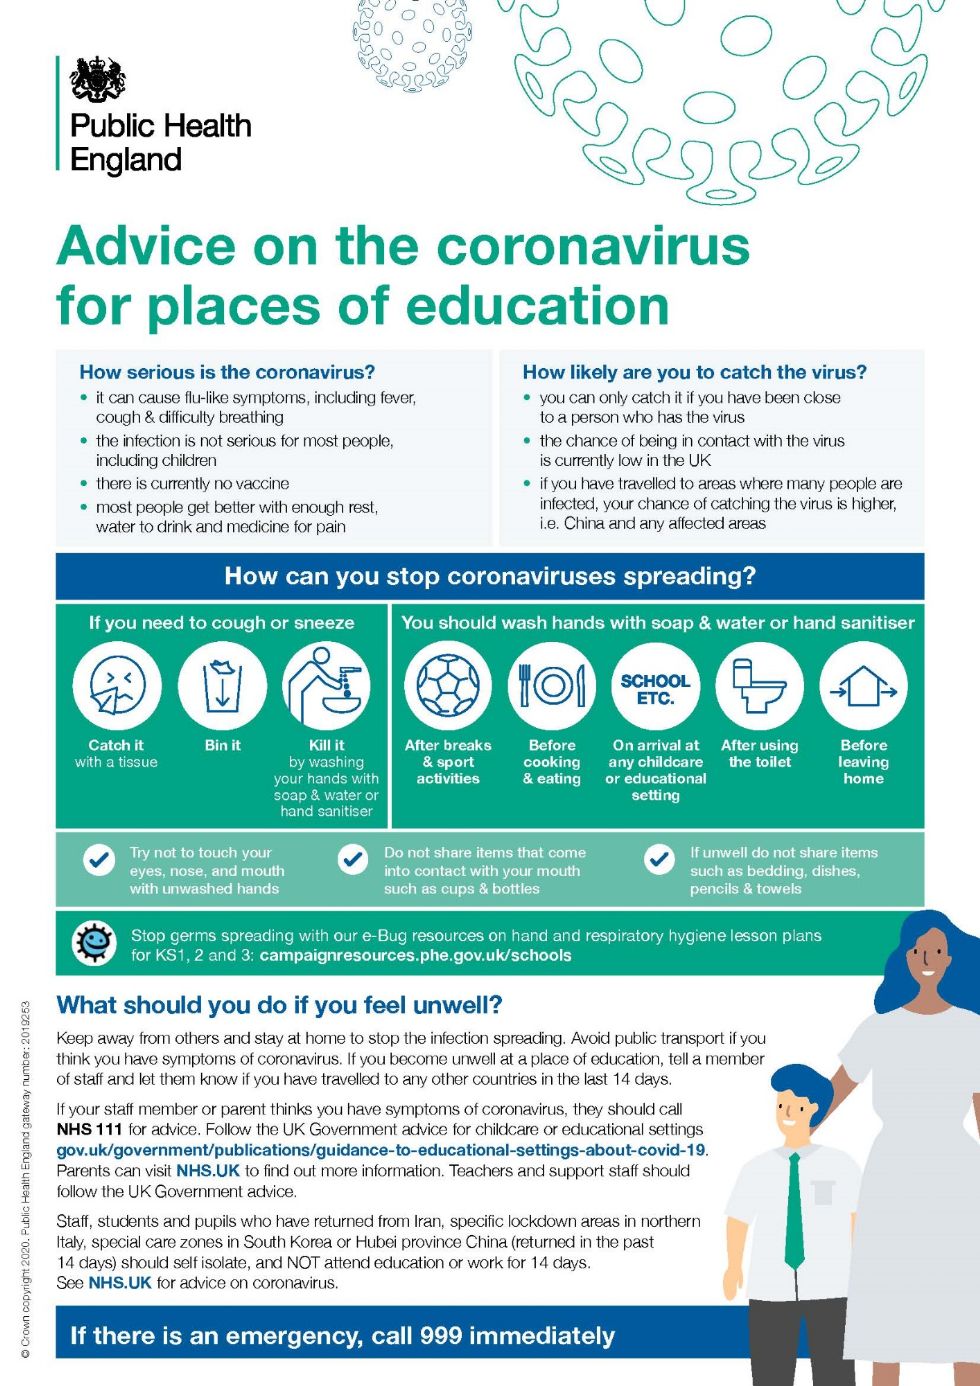 coronavirus advice